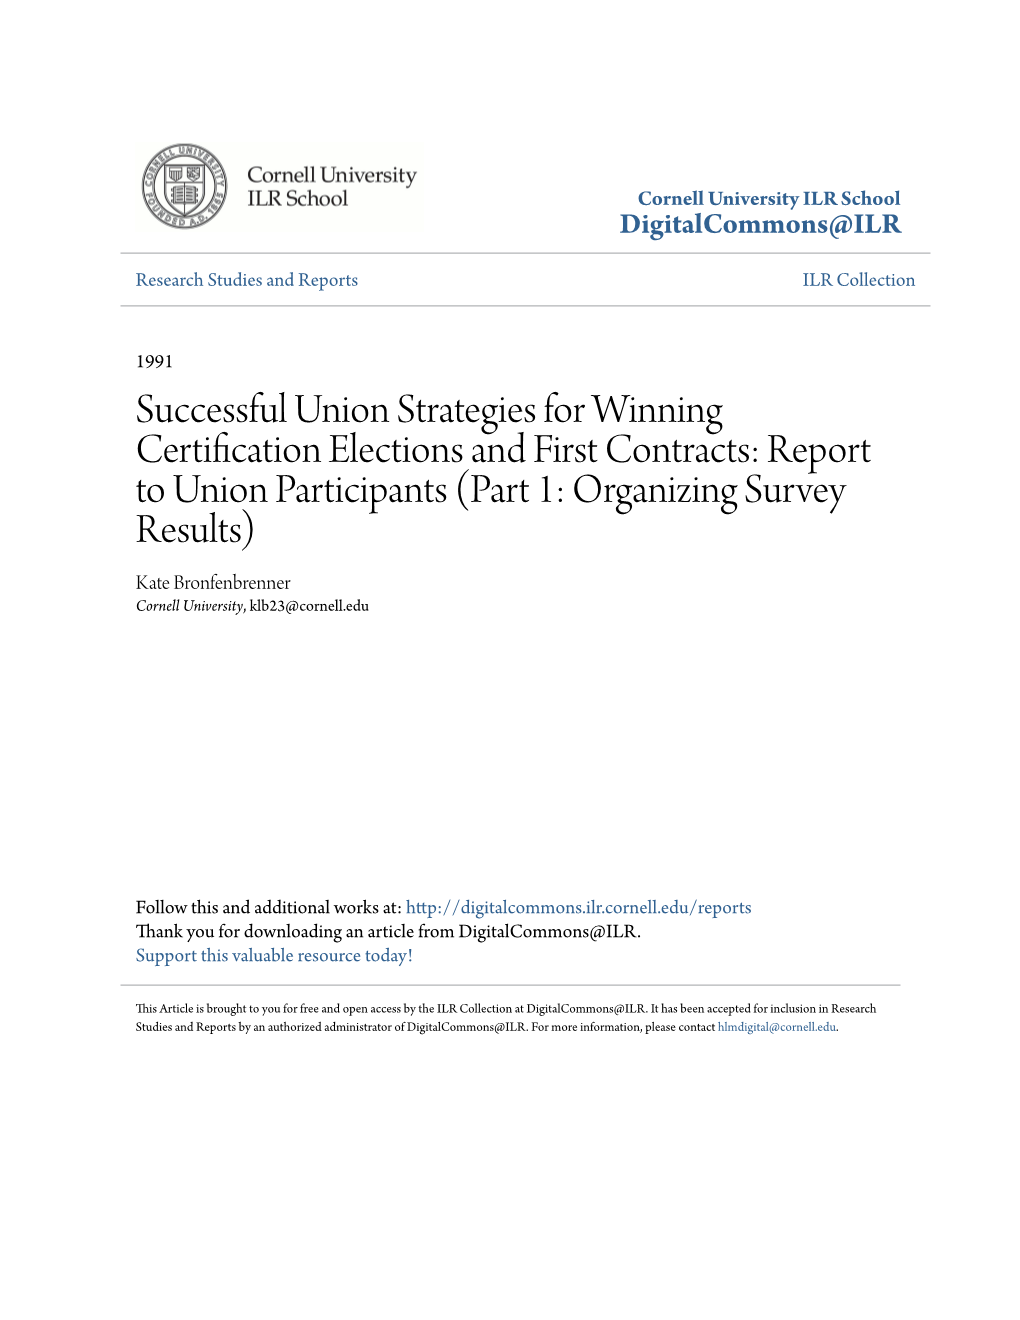 Report to Union Participants (Part 1: Organizing Survey Results) Kate Bronfenbrenner Cornell University, Klb23@Cornell.Edu